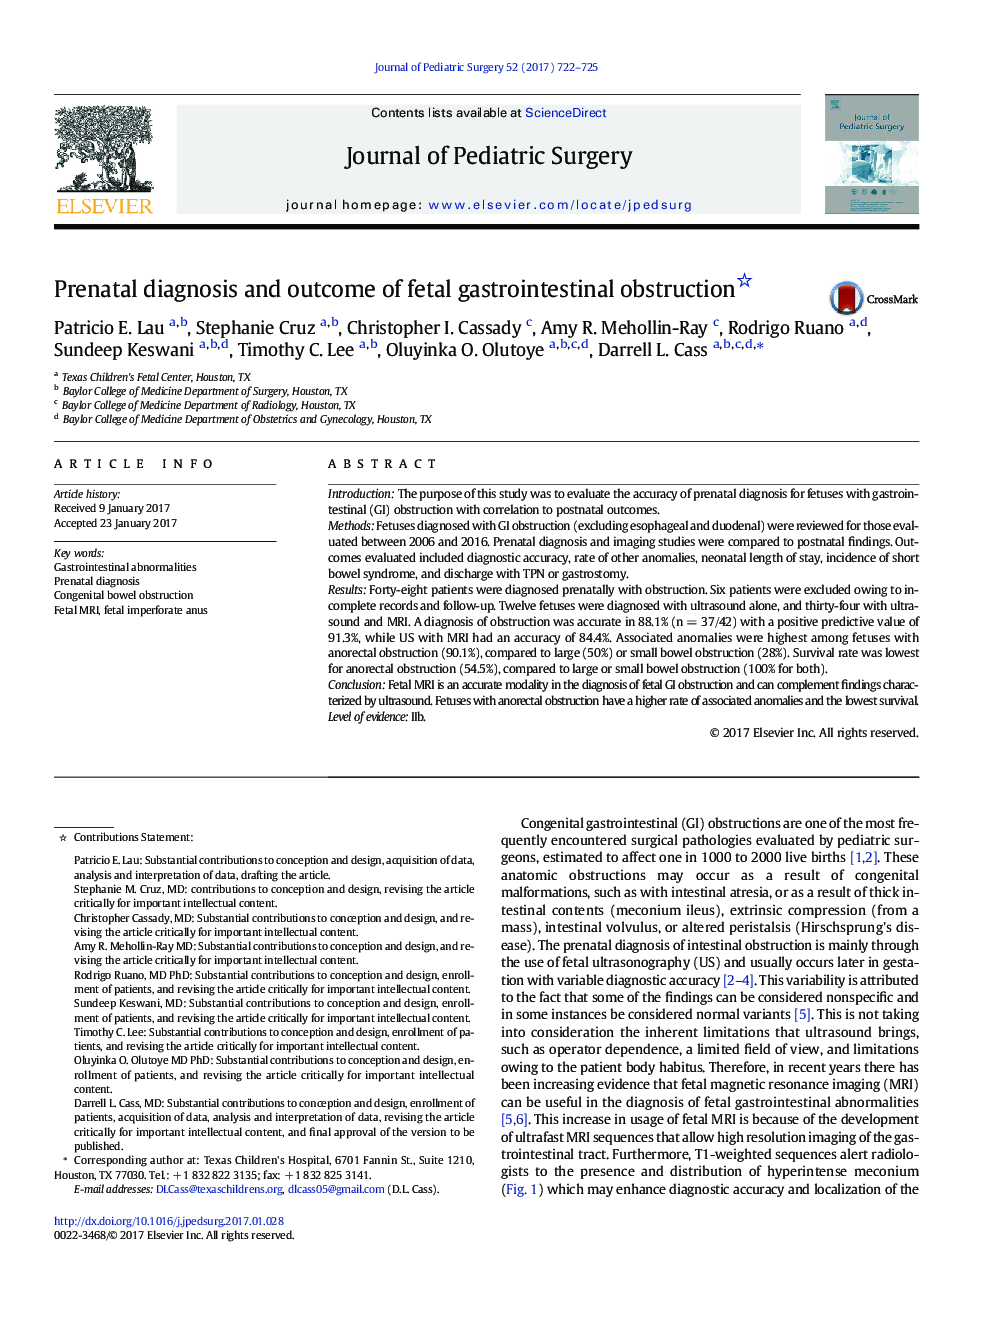 CAPS PaperPrenatal diagnosis and outcome of fetal gastrointestinal obstruction